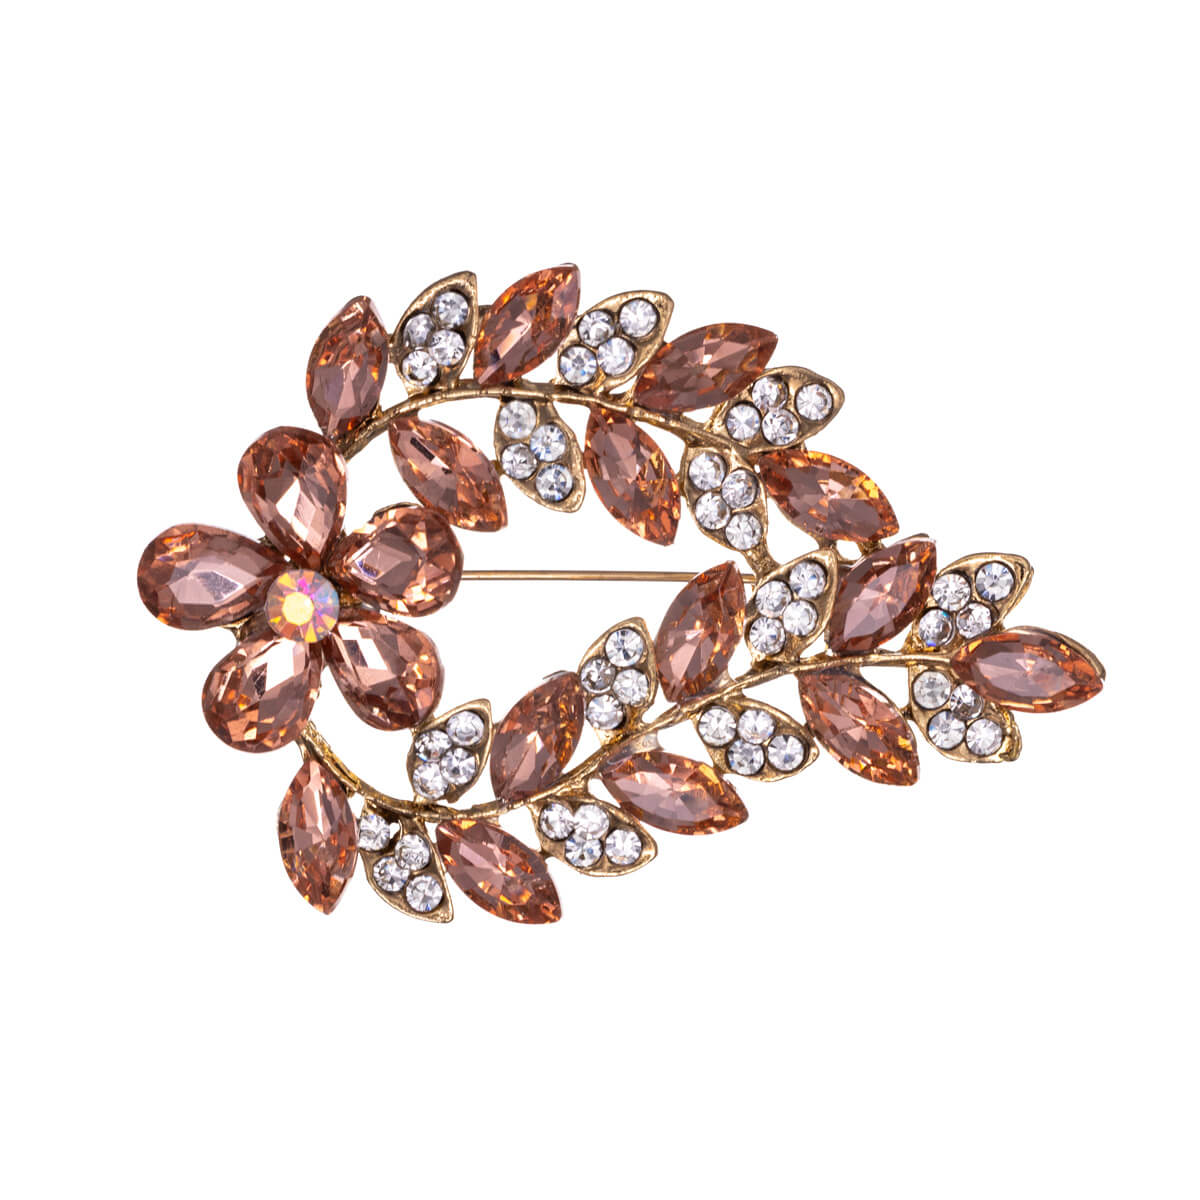 Sparkling flower wreath brooch